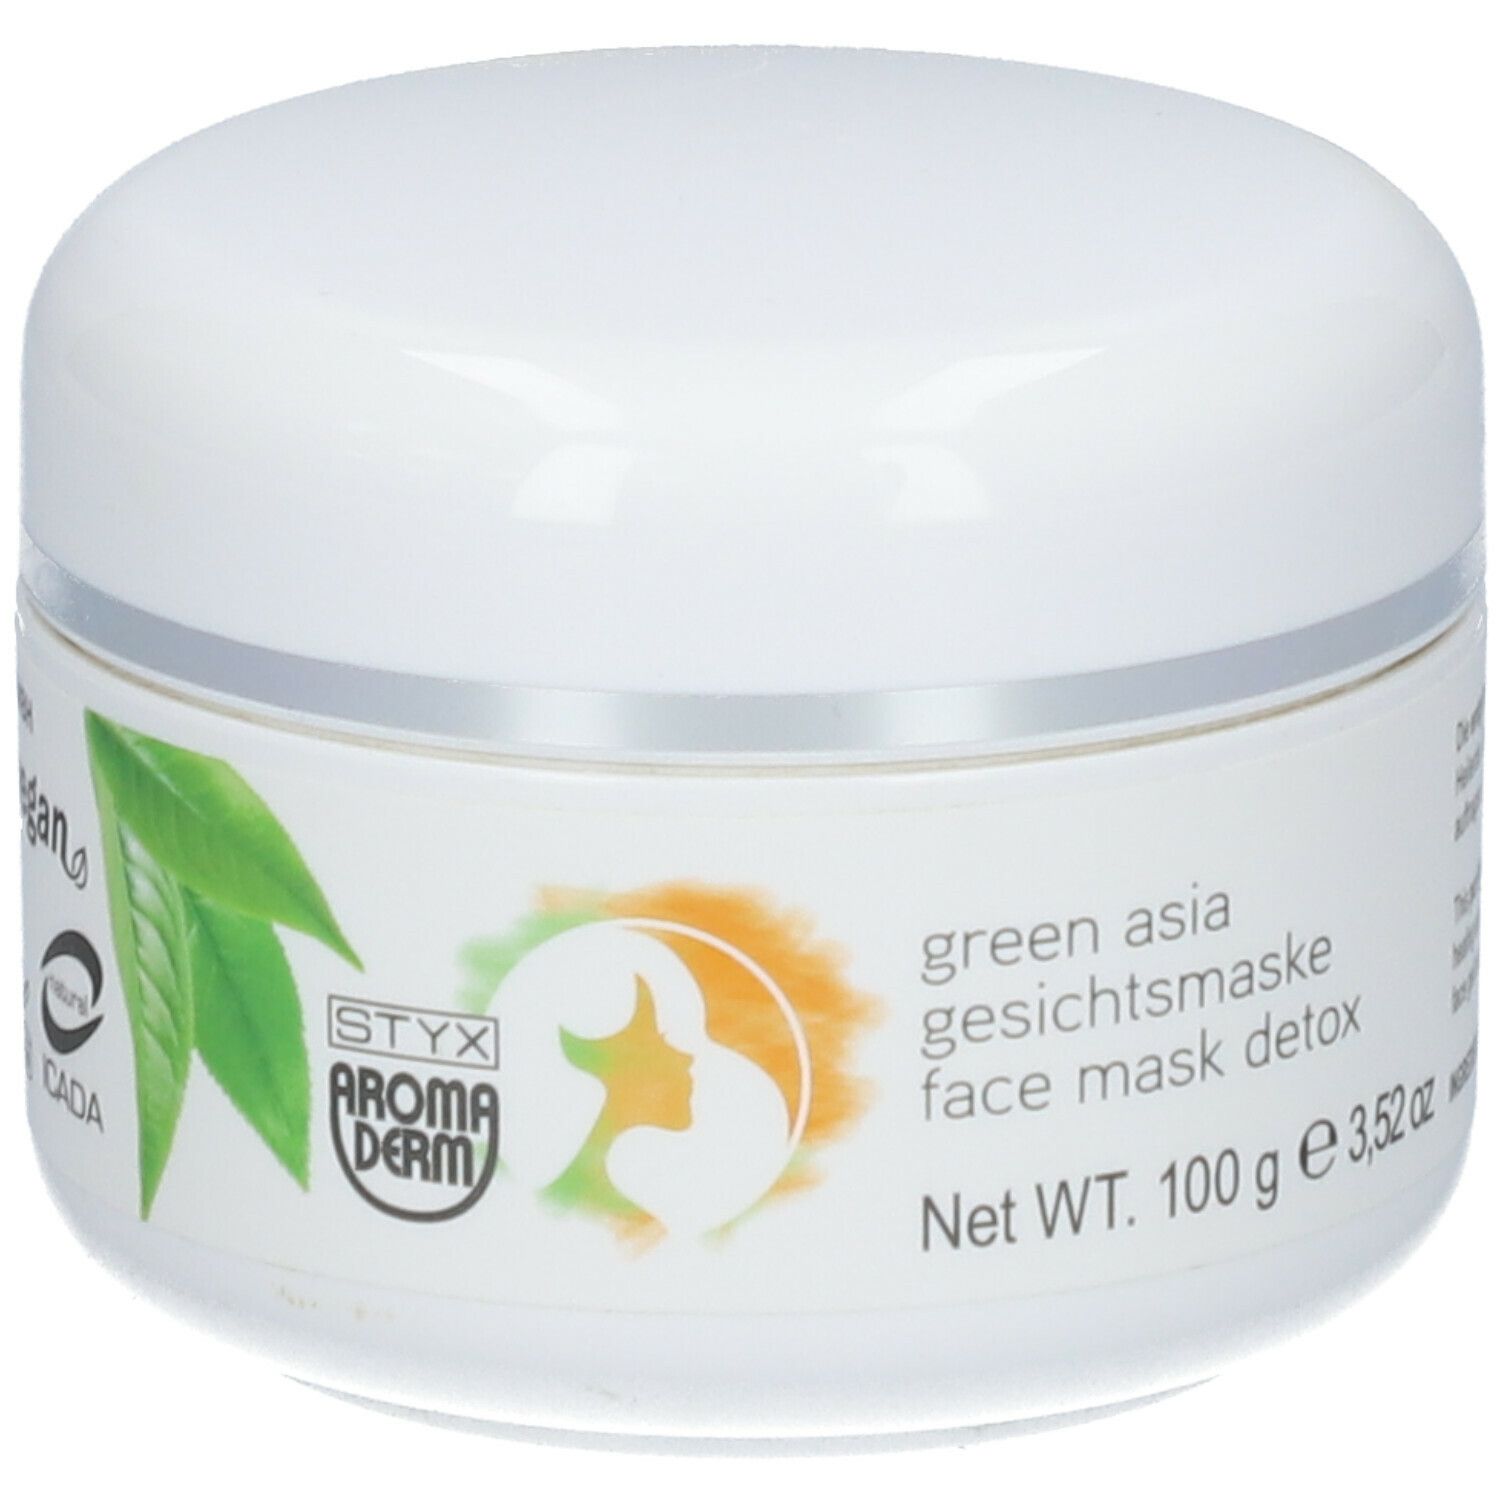 STYX AROMADERM Green Asia Gesichtsmaske Detox